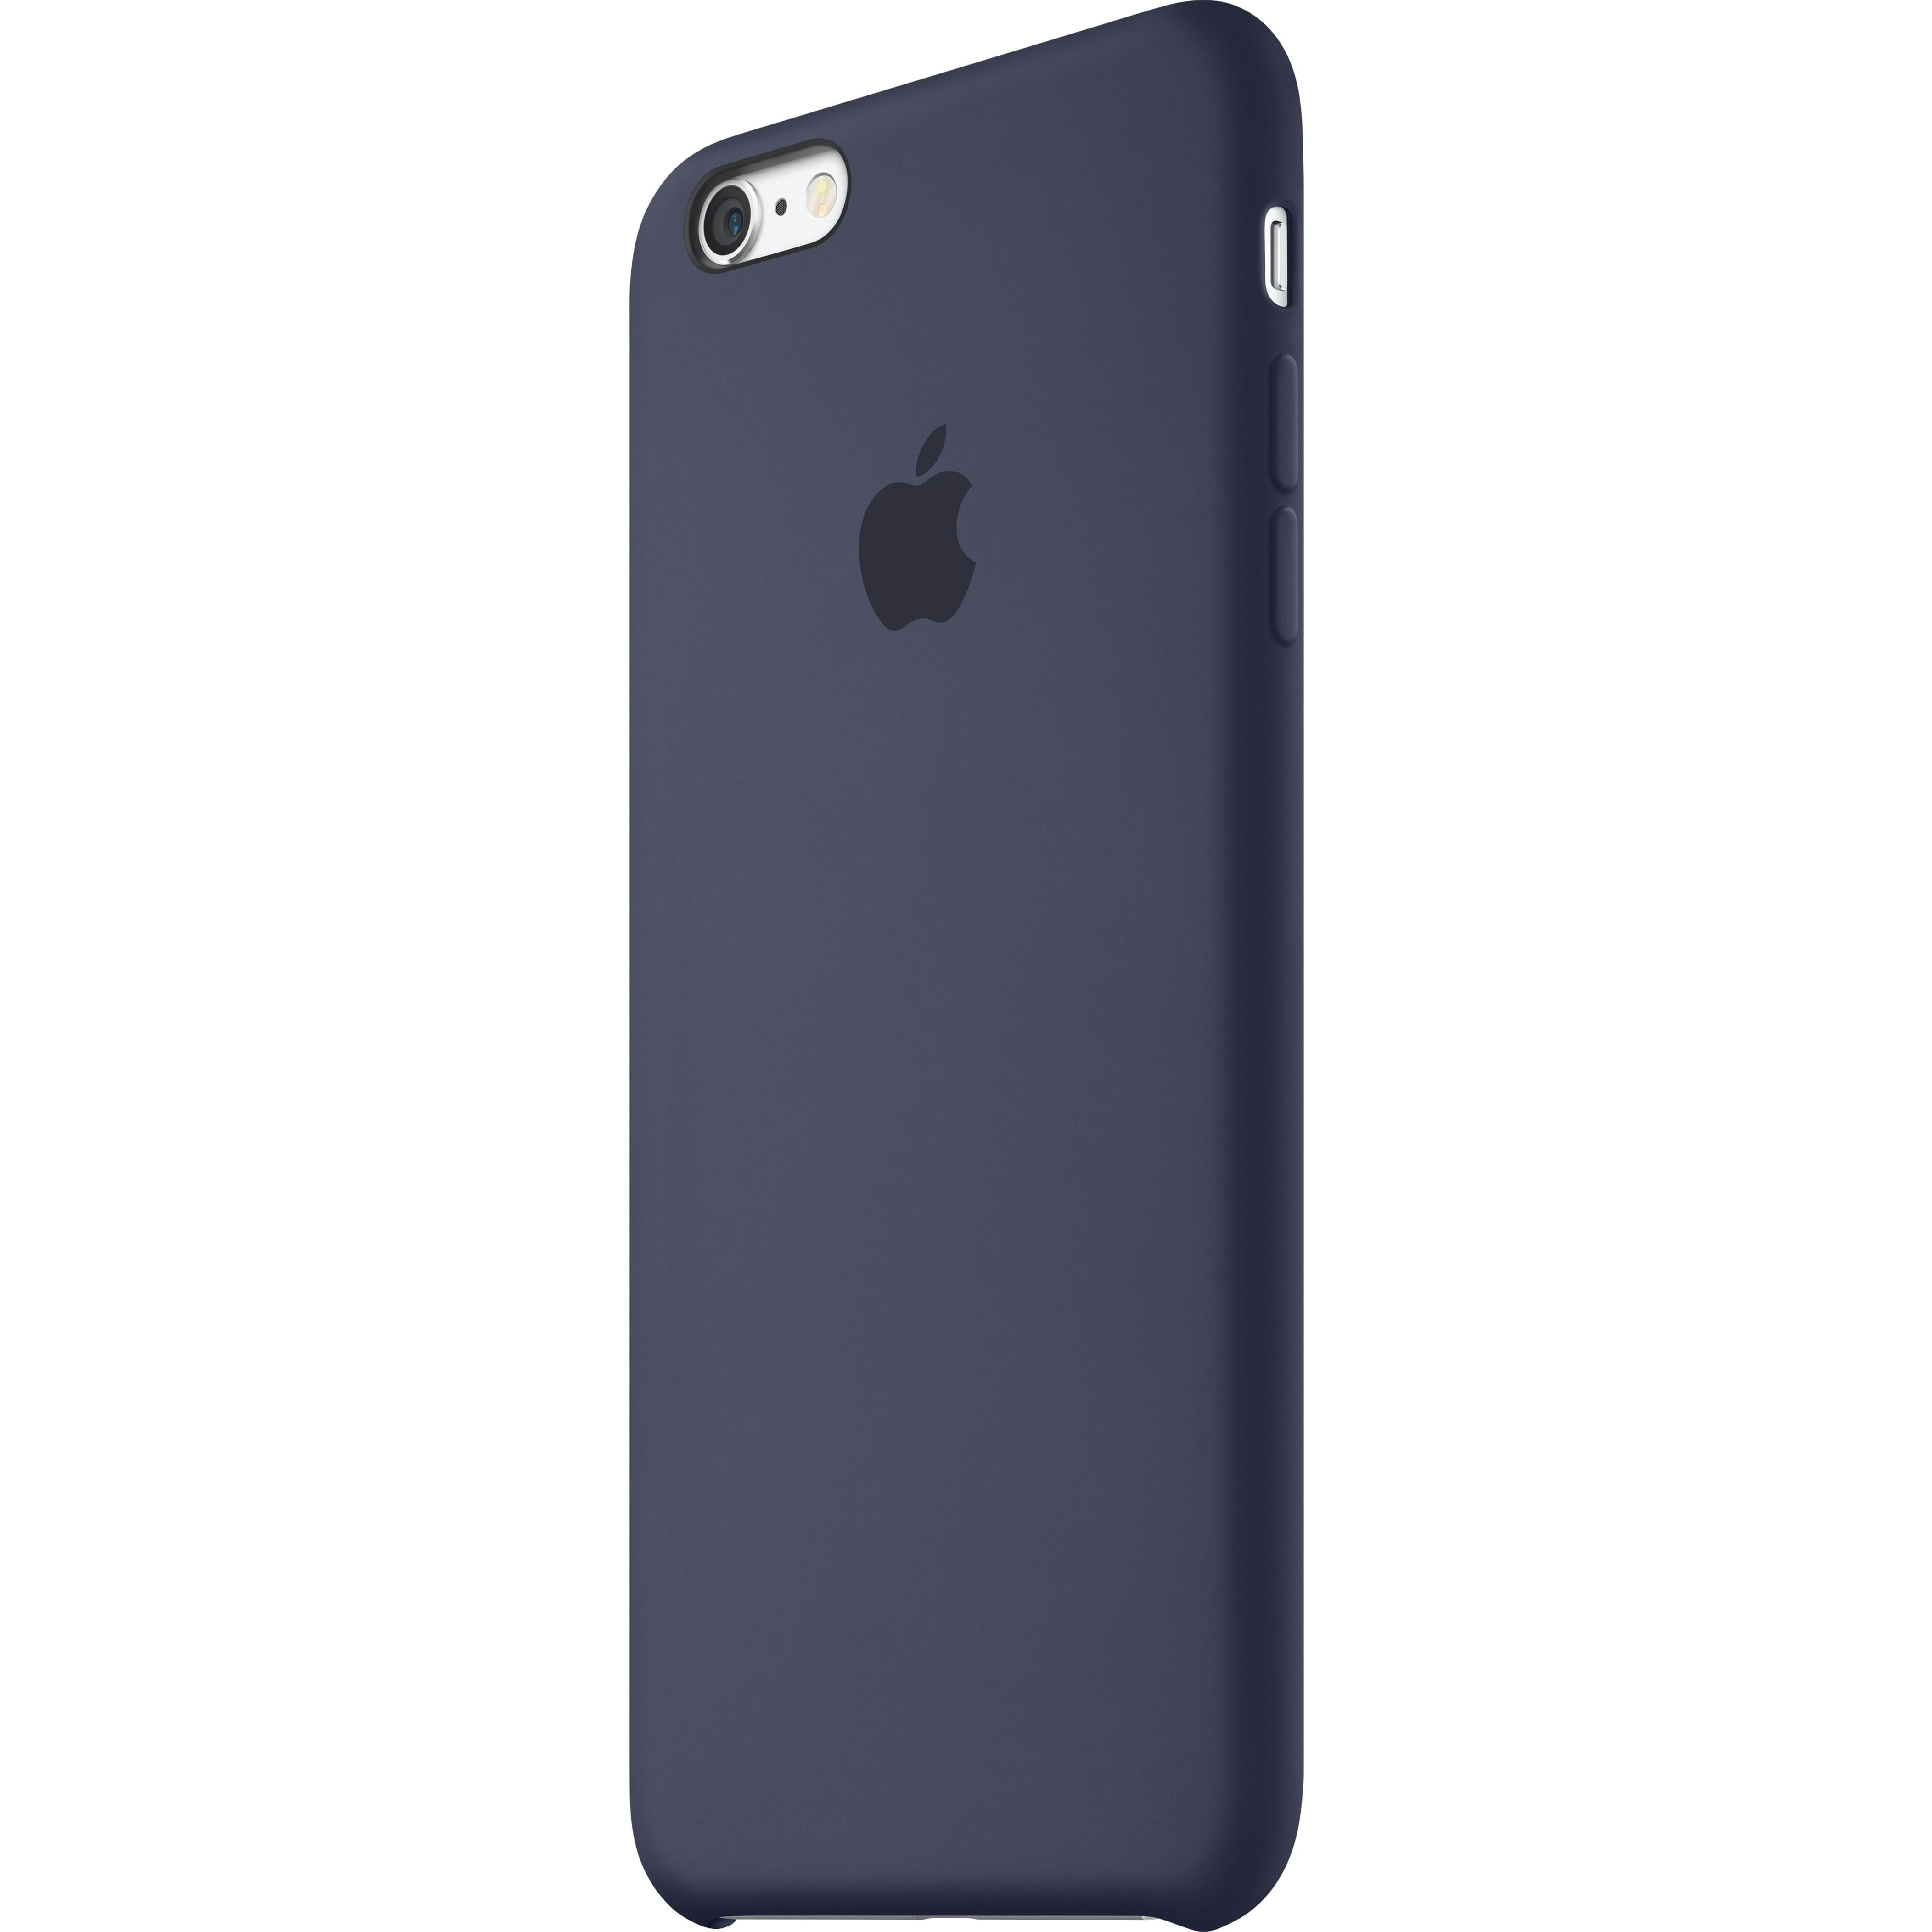 wasmiddel cruise bericht Apple iPhone 6 Plus Silicone Case, Black - Walmart.com